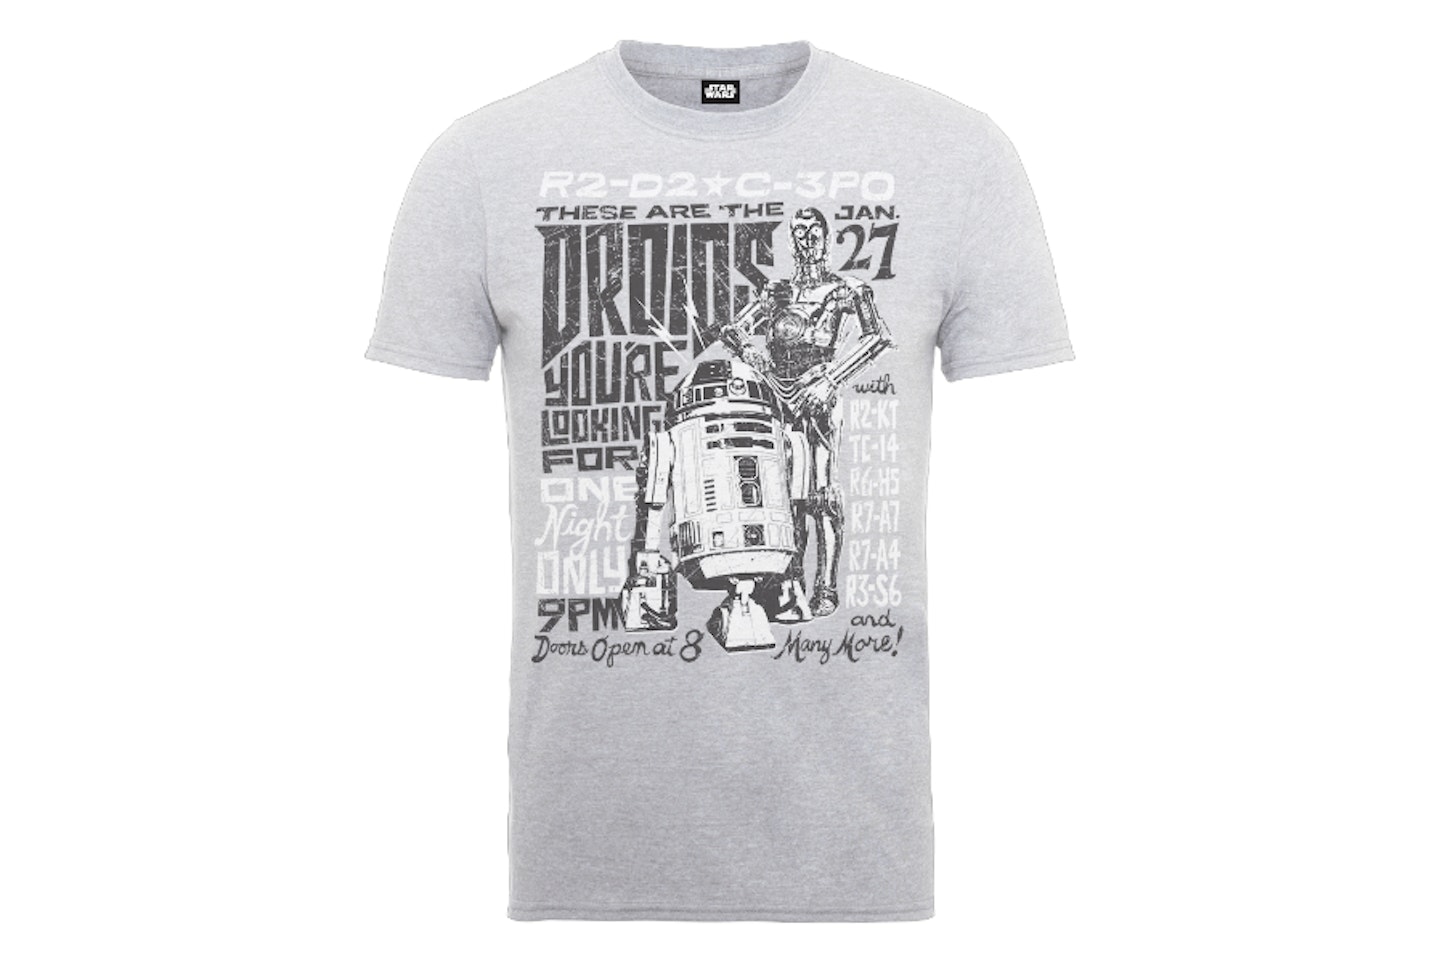 Droids Rock Poster T-Shirt